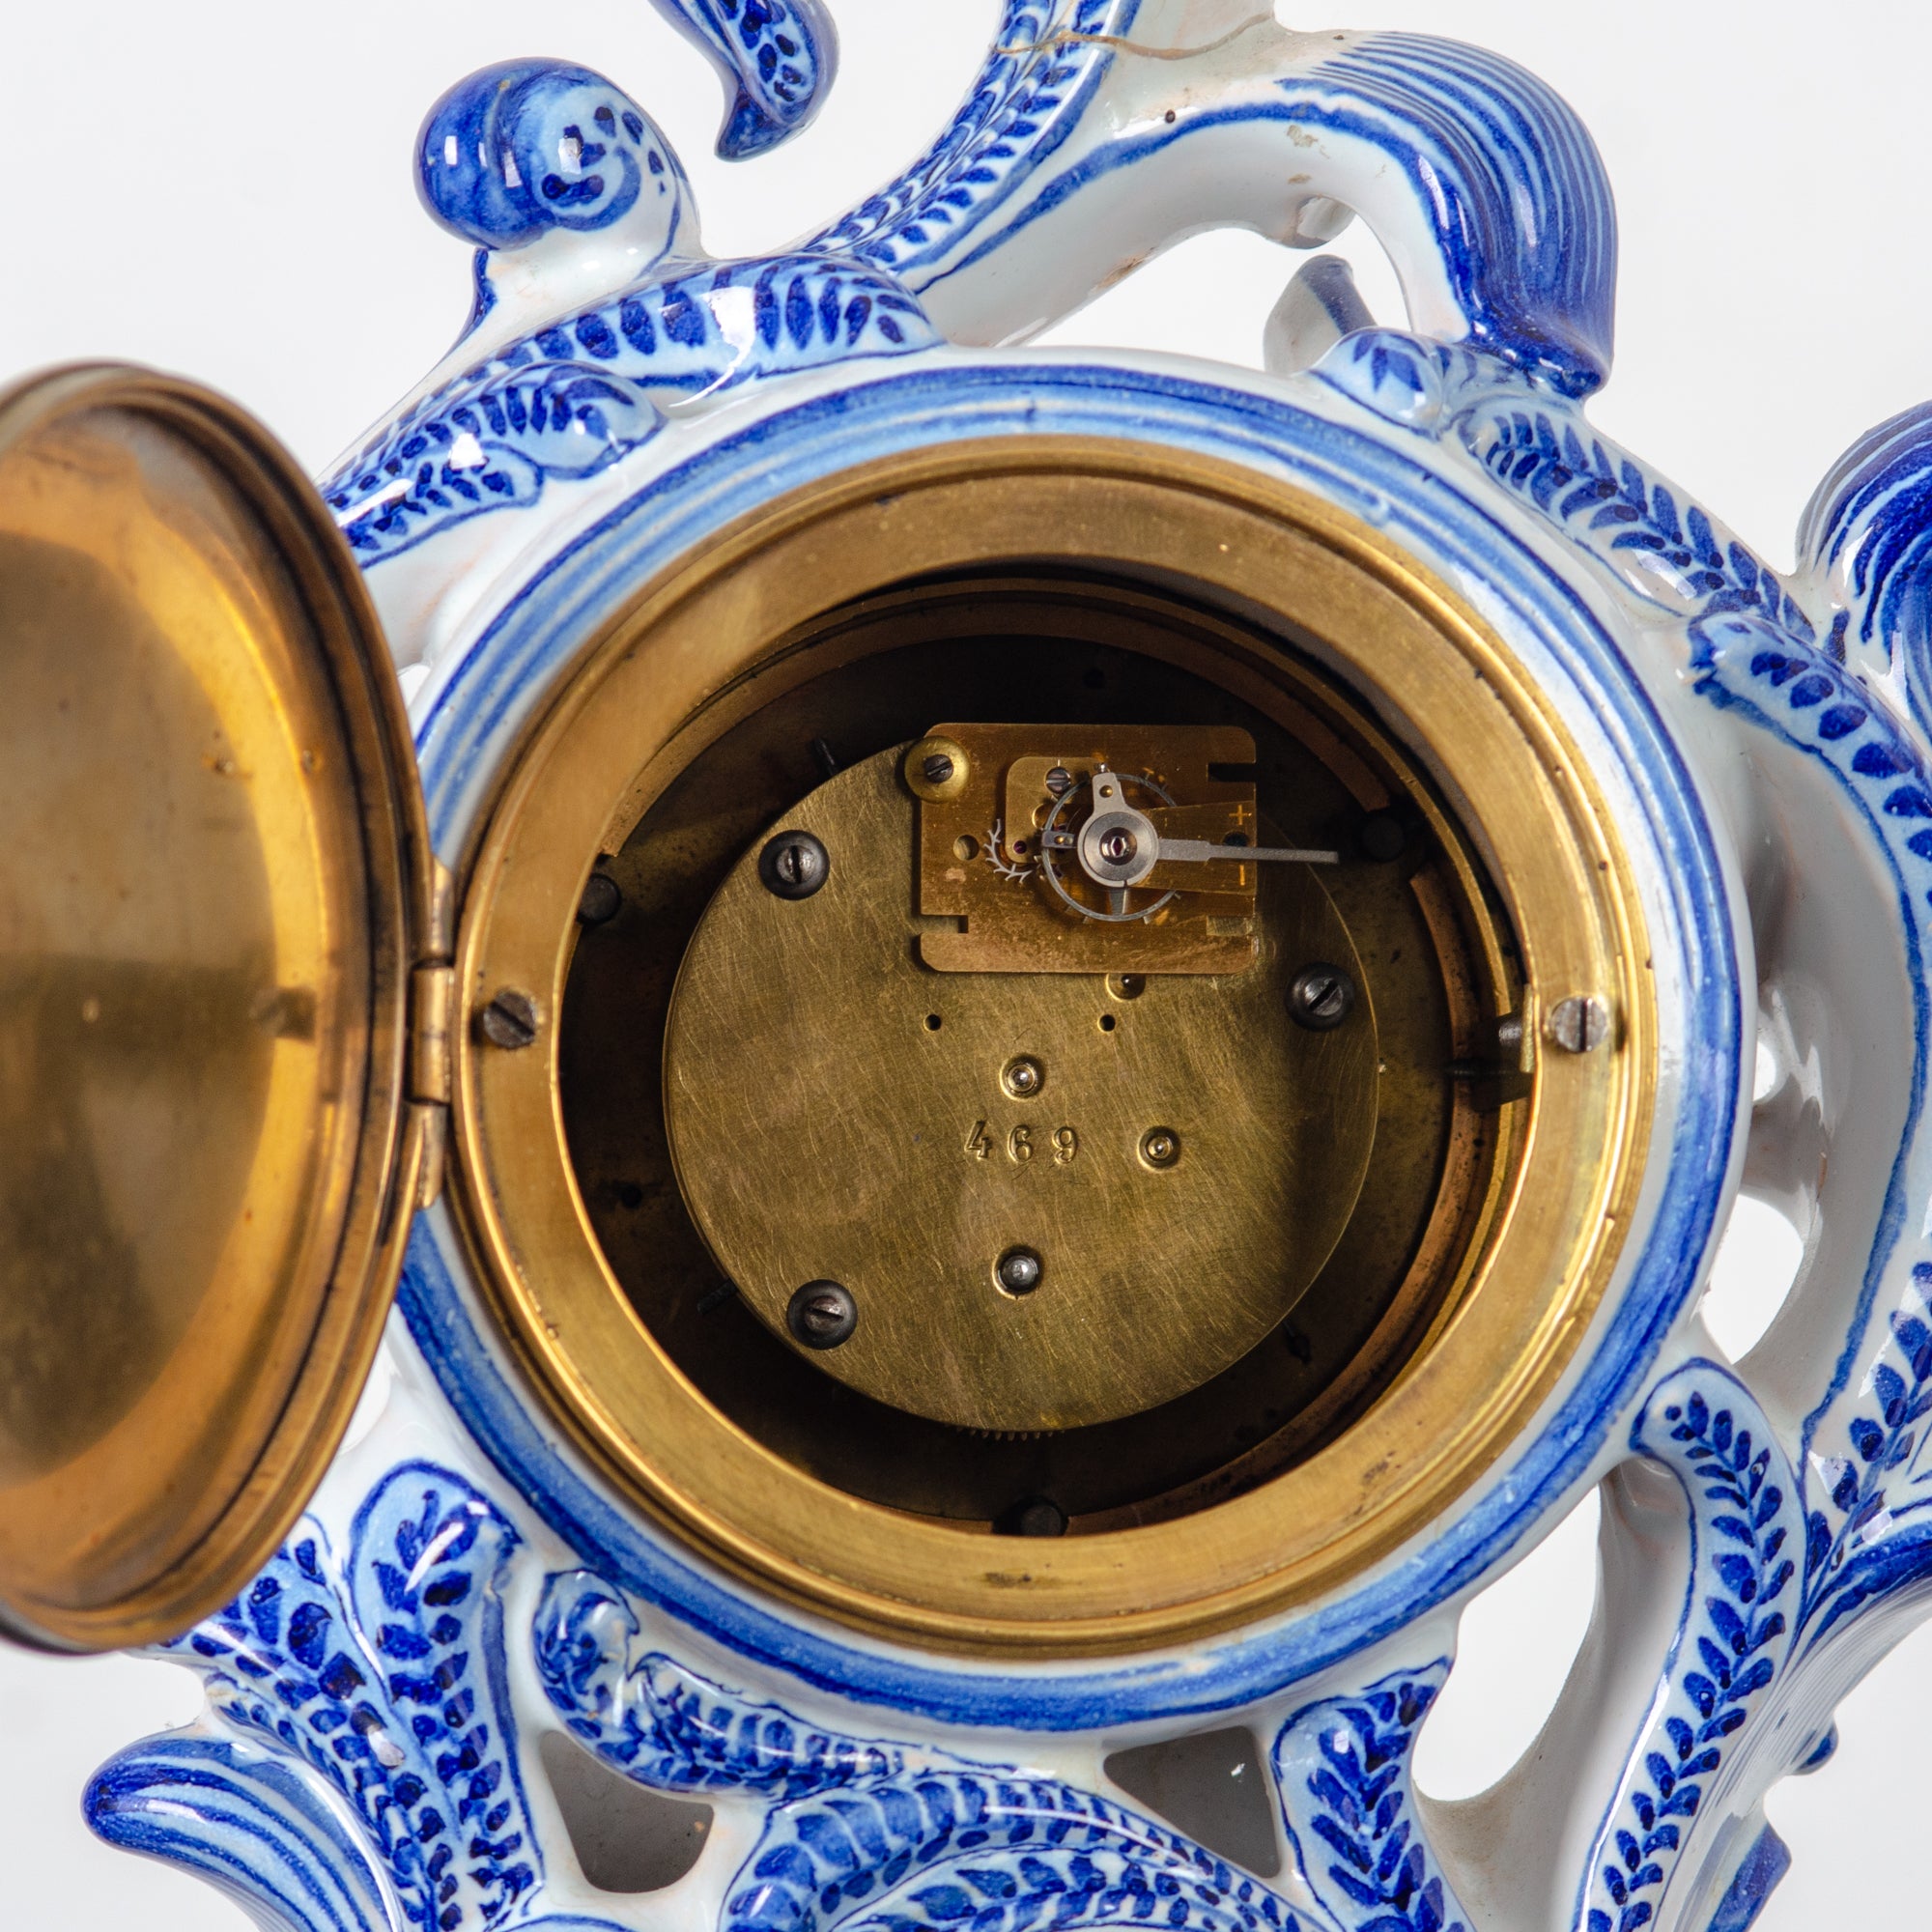 Emile Gallé Rococo Faience Mantle Clock, 19th Century